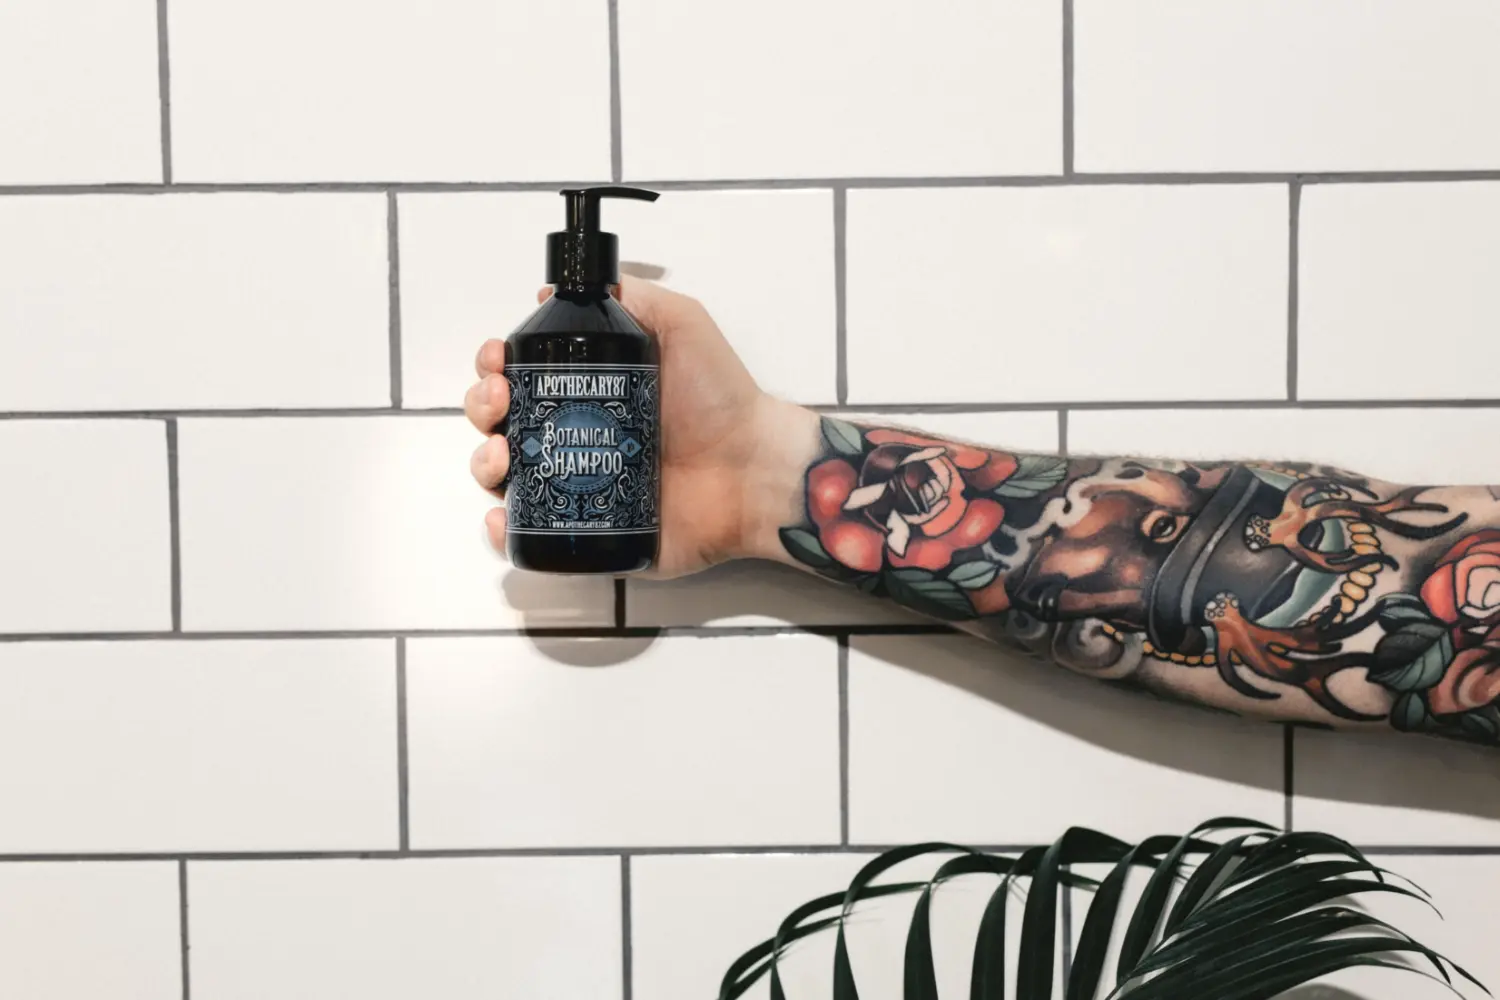 man with tattoo arm holding shampoo bottle